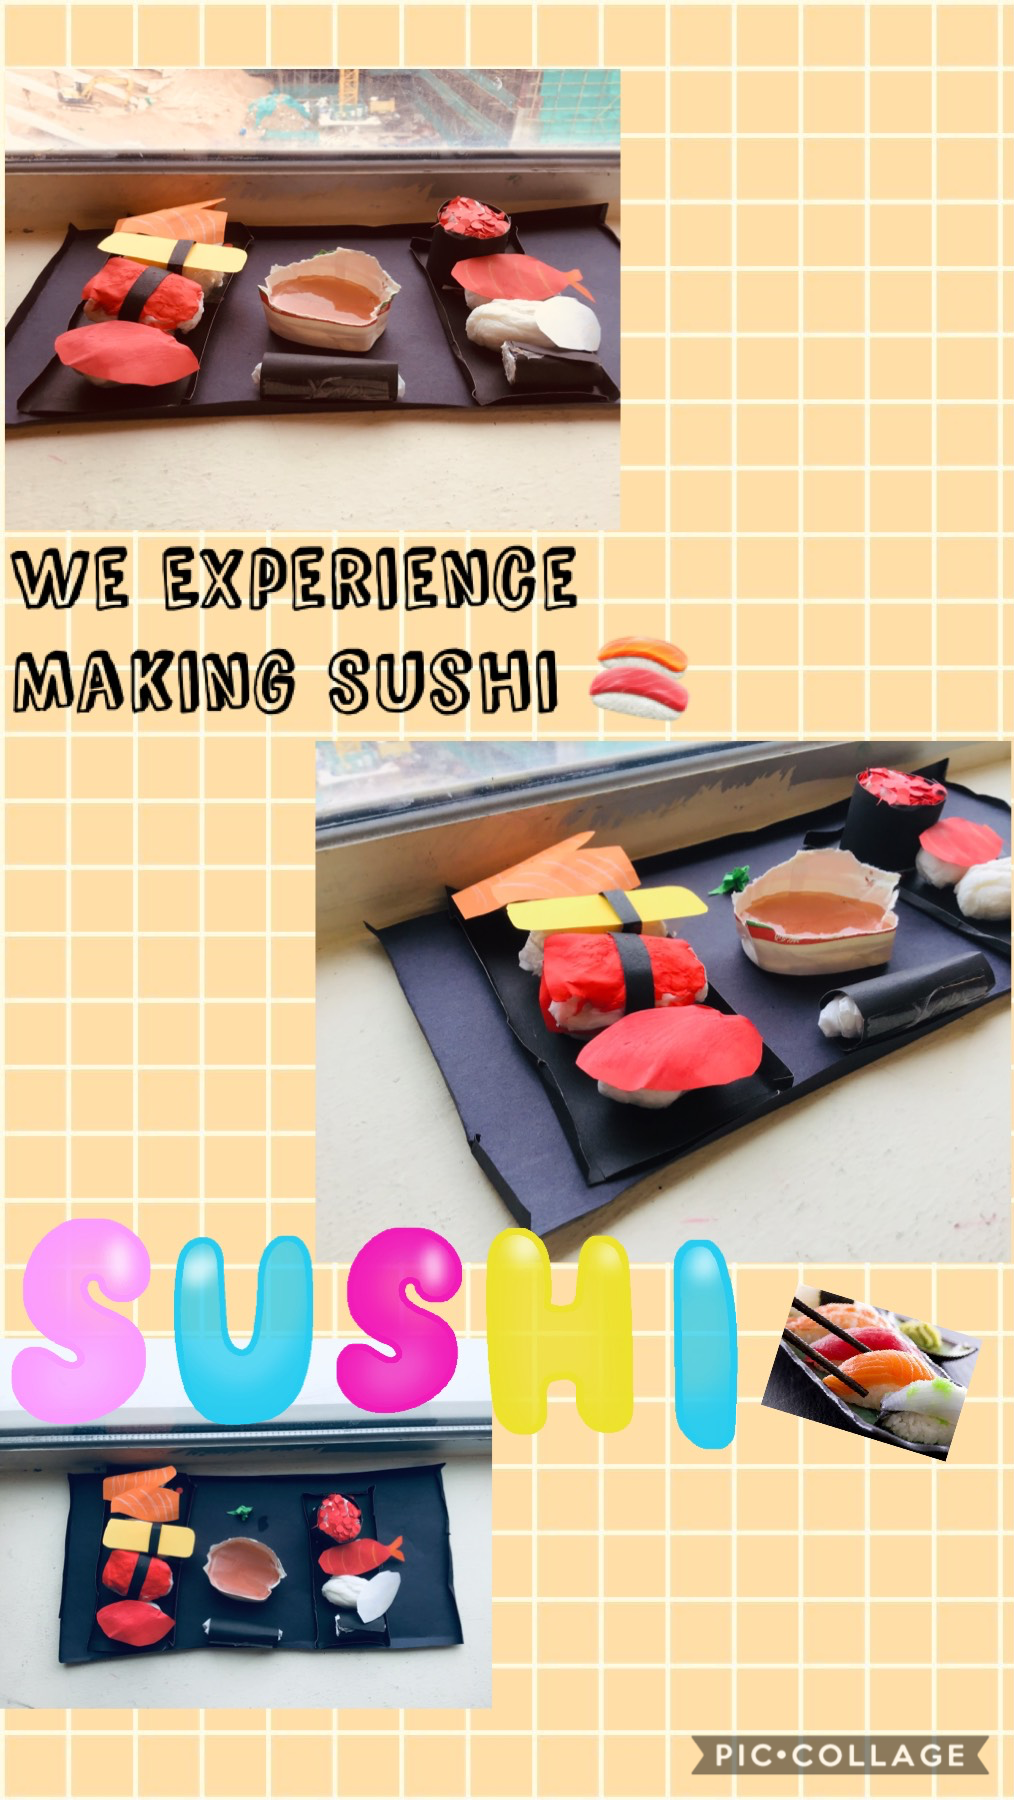 Making Sushi In GH